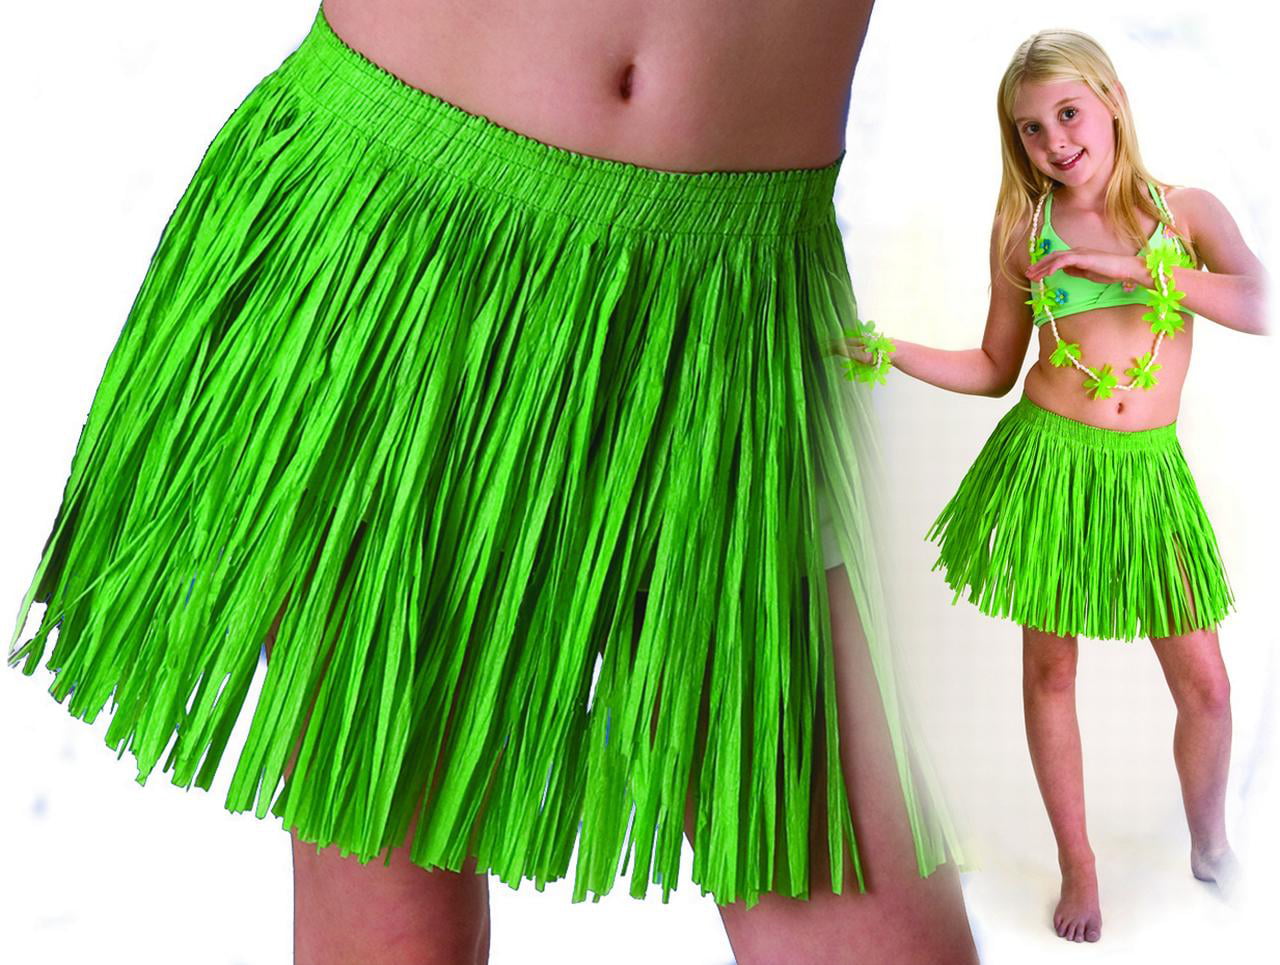 Luau Party Hula Girl Genuine Raffia Grass Hula Skirt, Natural, Large 36IN  Waist